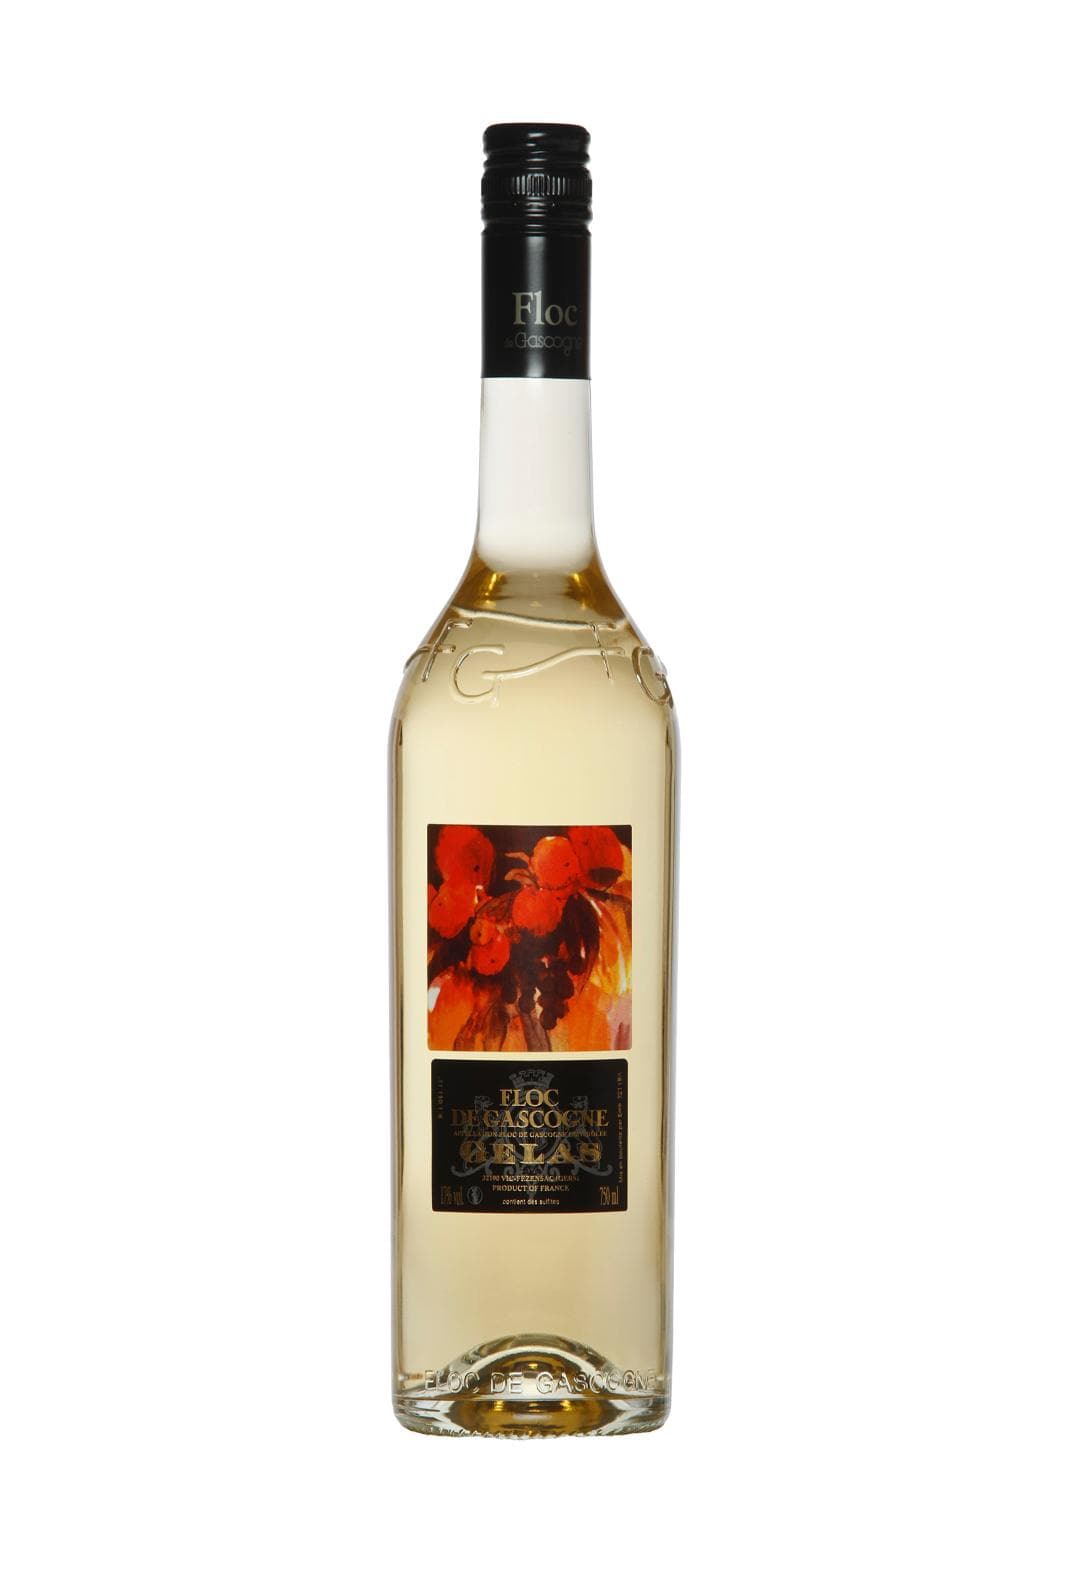 Gelas Floc de Gascogne Blanc (White Mistelle) 17% 750ml | Liquor & Spirits | Shop online at Spirits of France